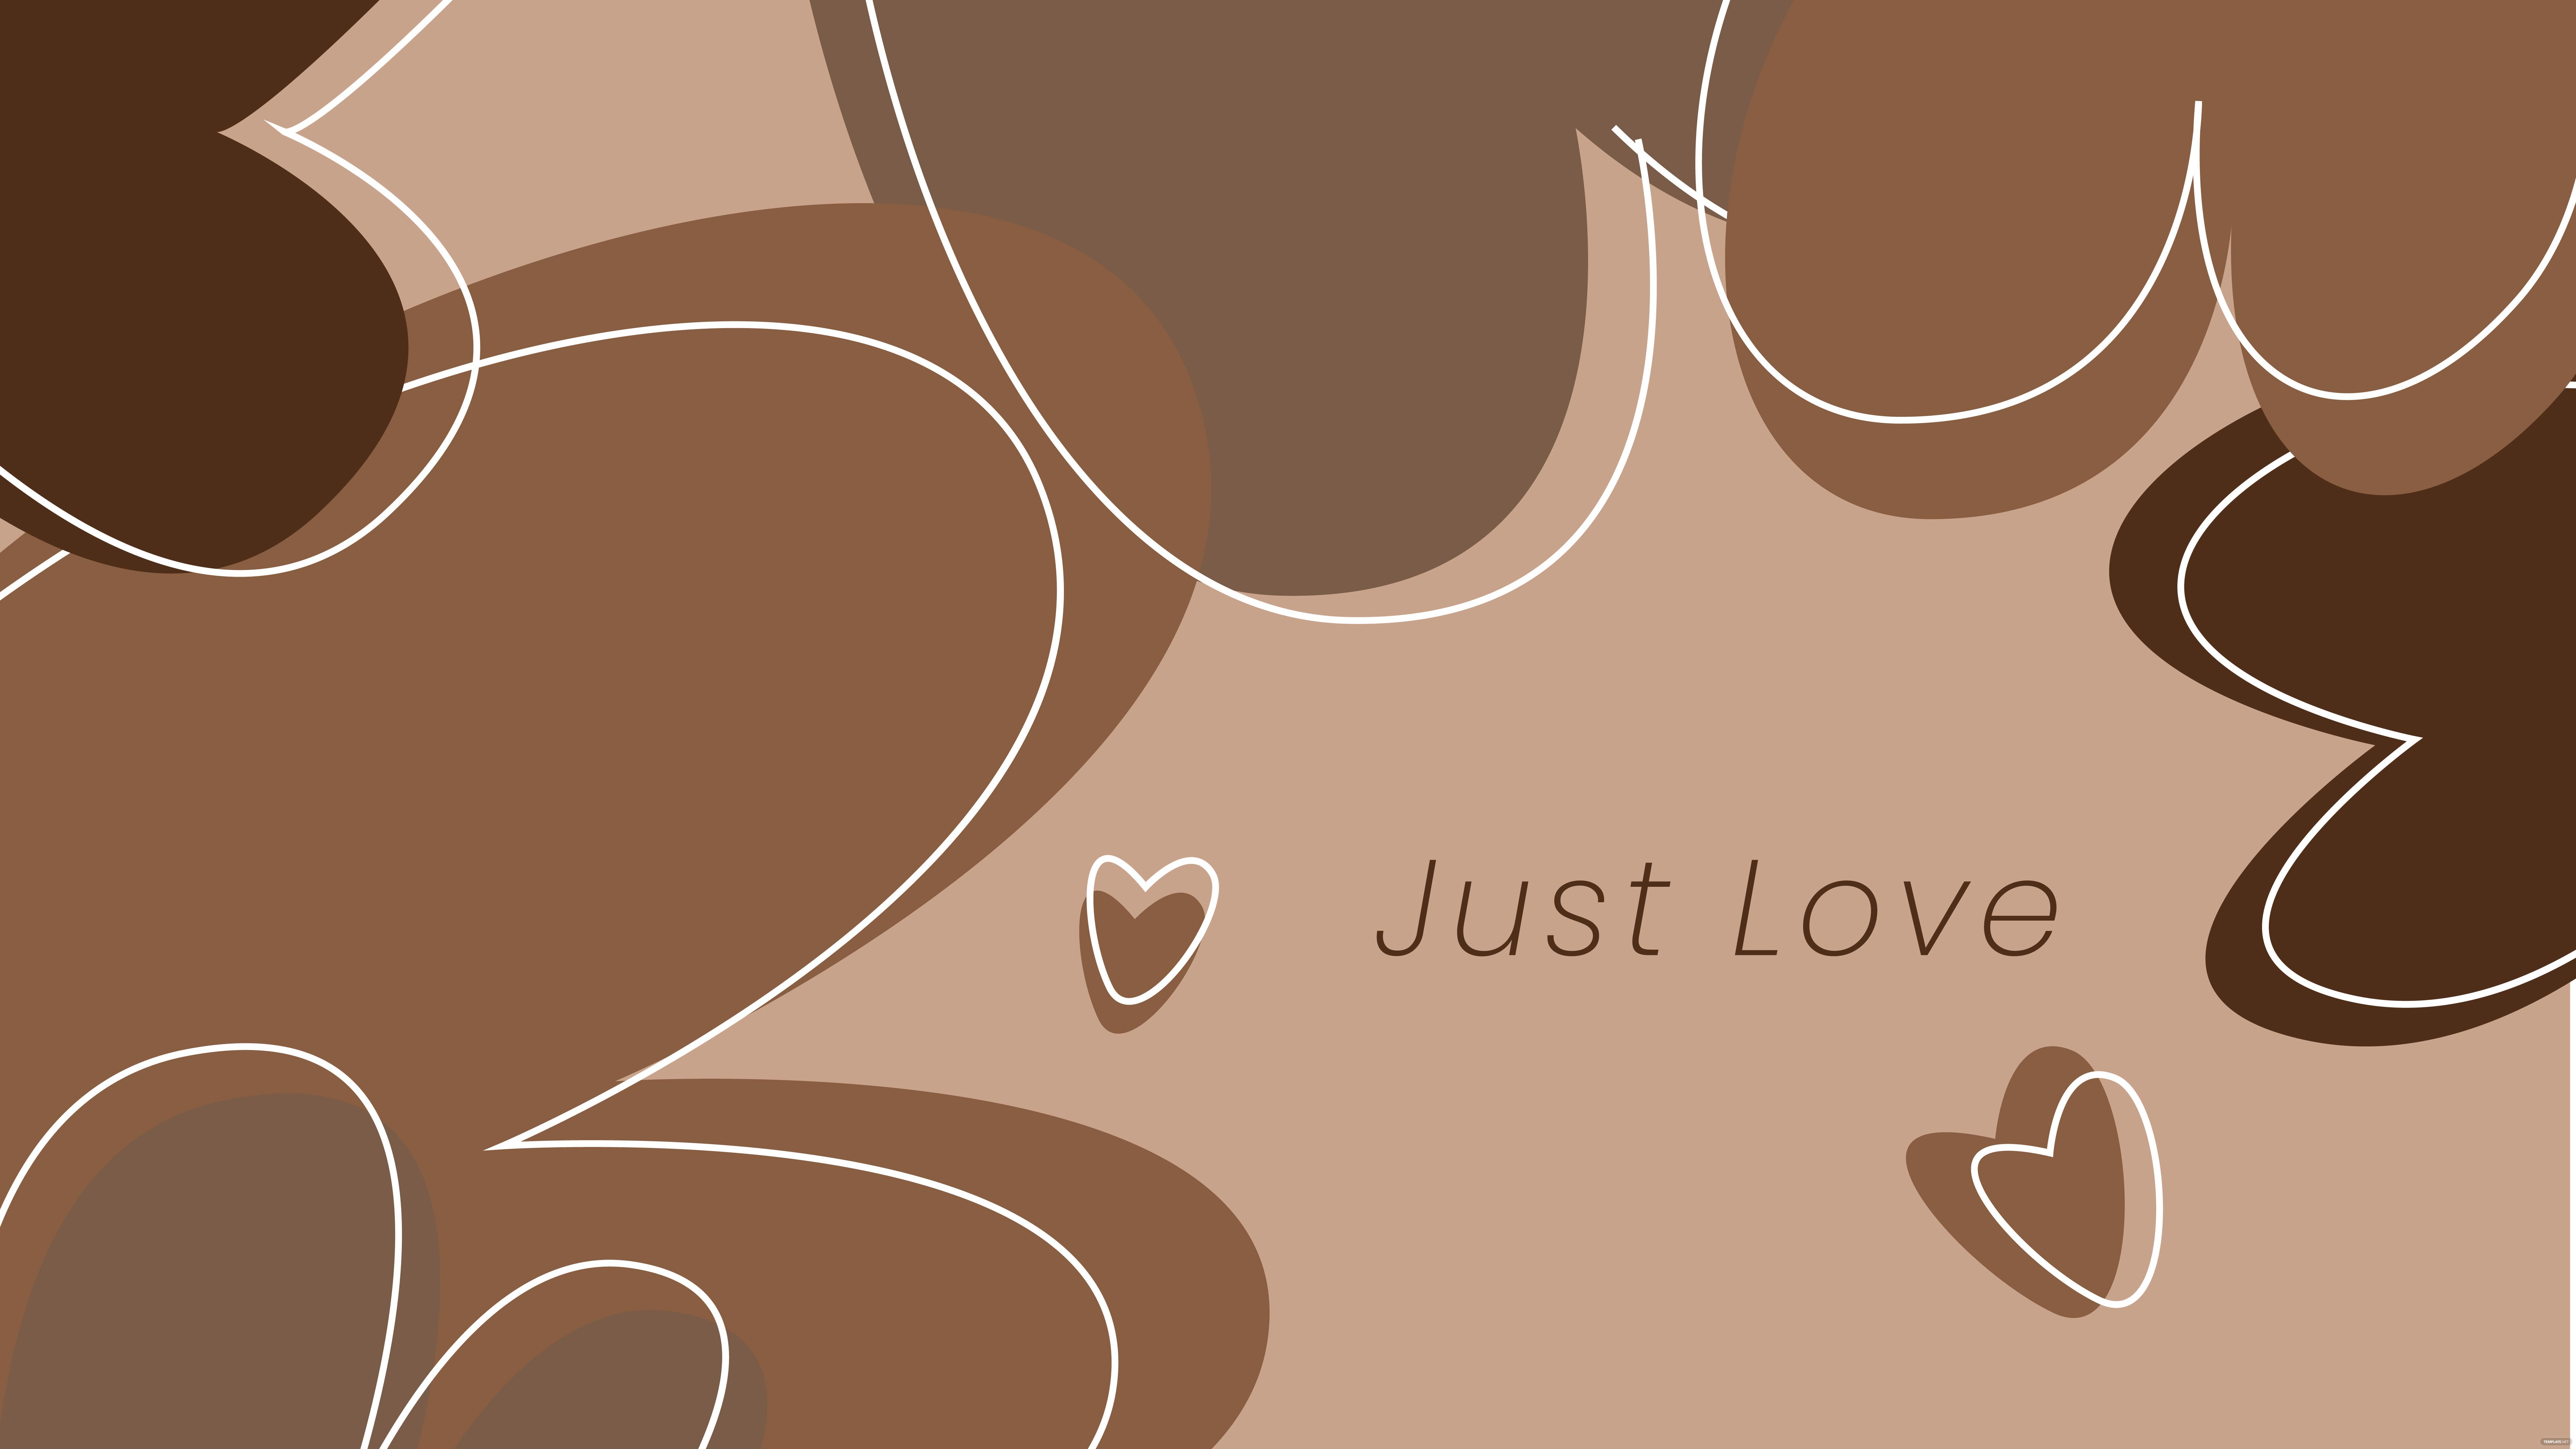 Free Brown Heart Wallpaper, Illustrator, JPG, PNG, SVG